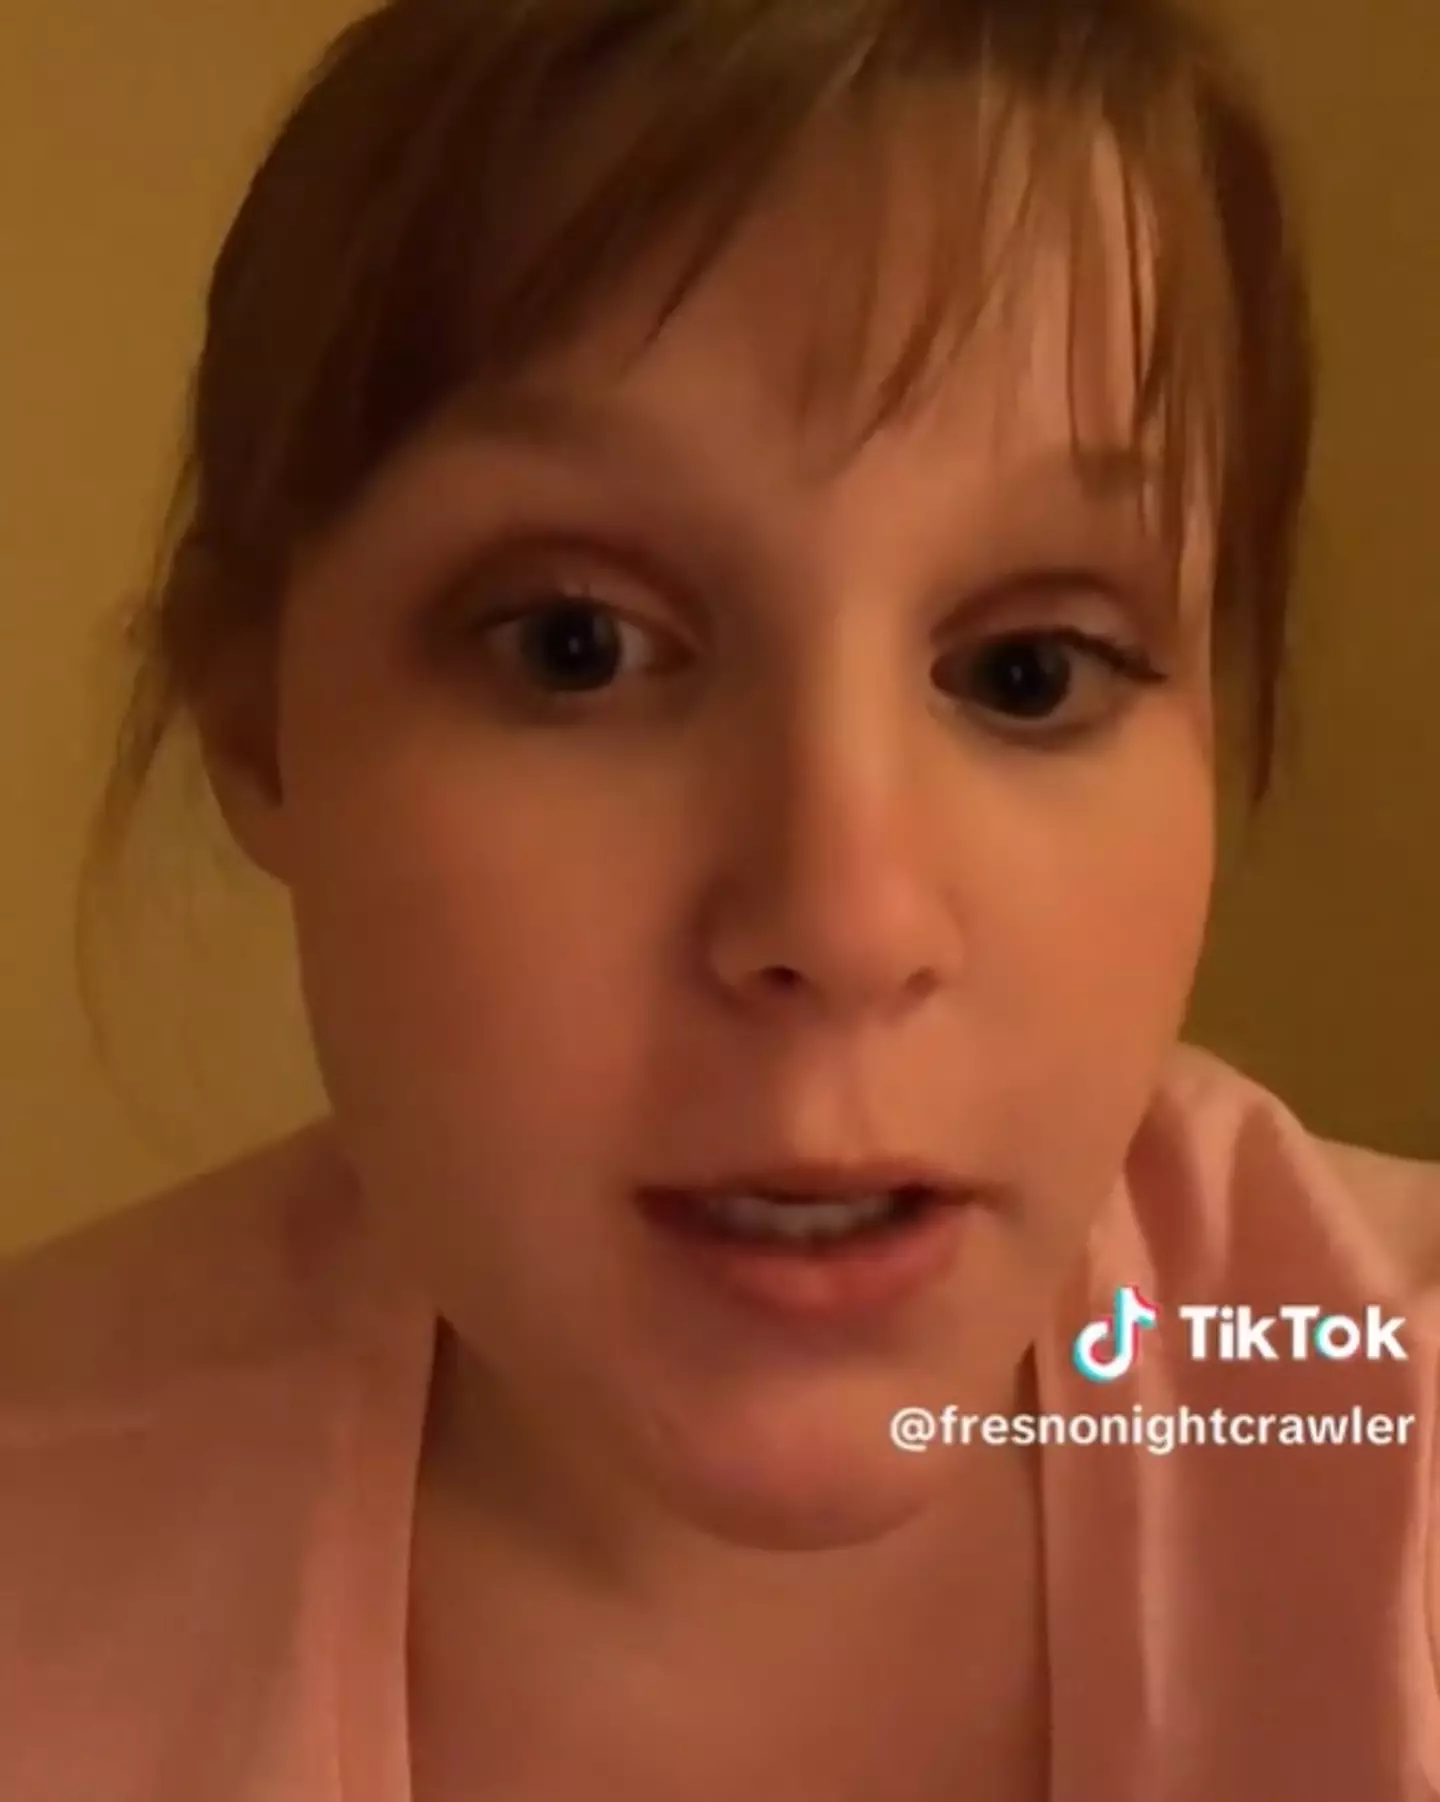 Lauren shared the story of her uterine prolapse to TikTok.